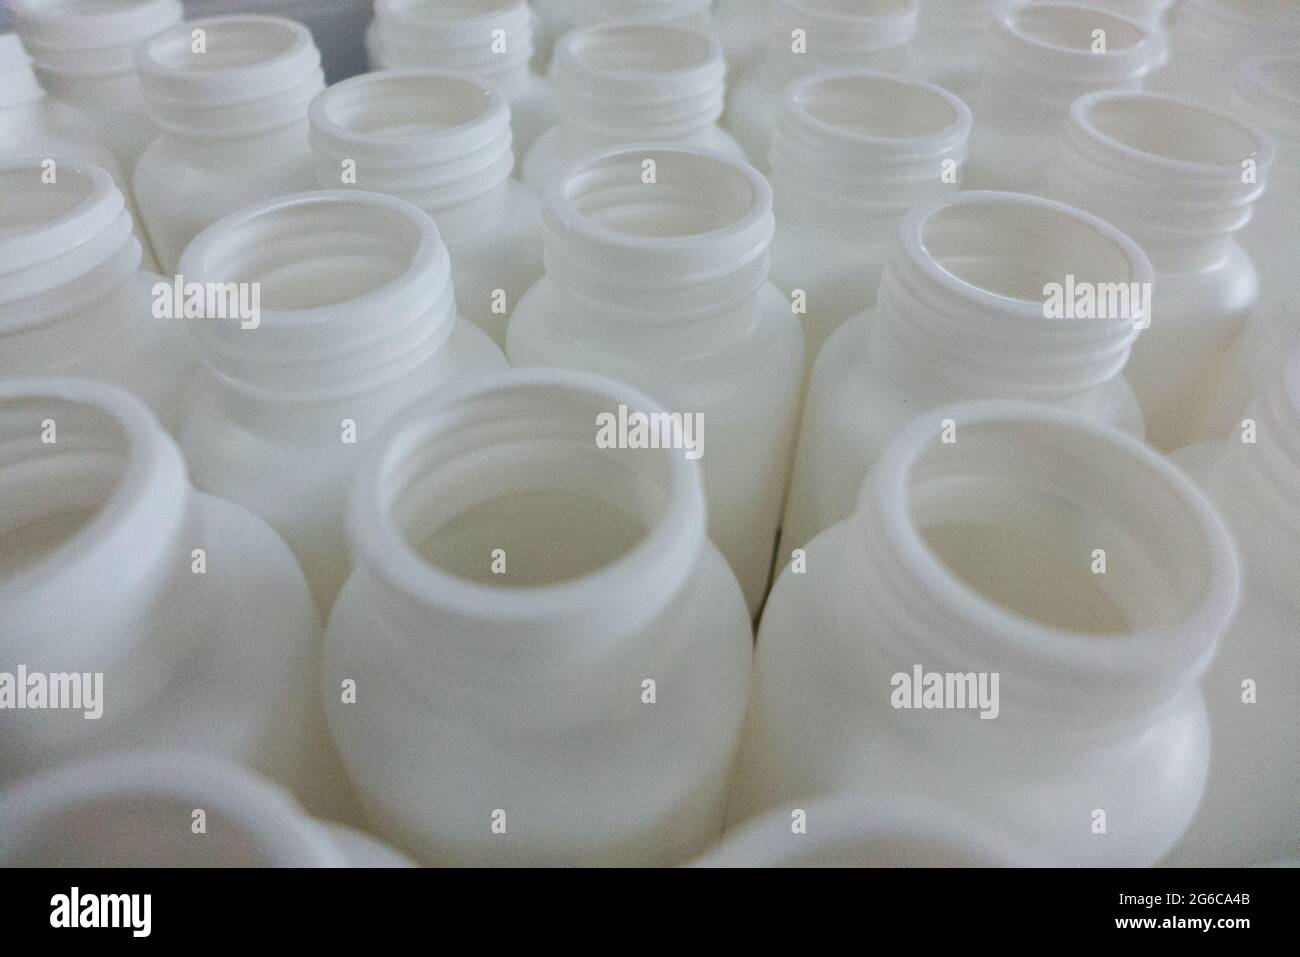 Empty white medical plastic bottles for production Stock Photo